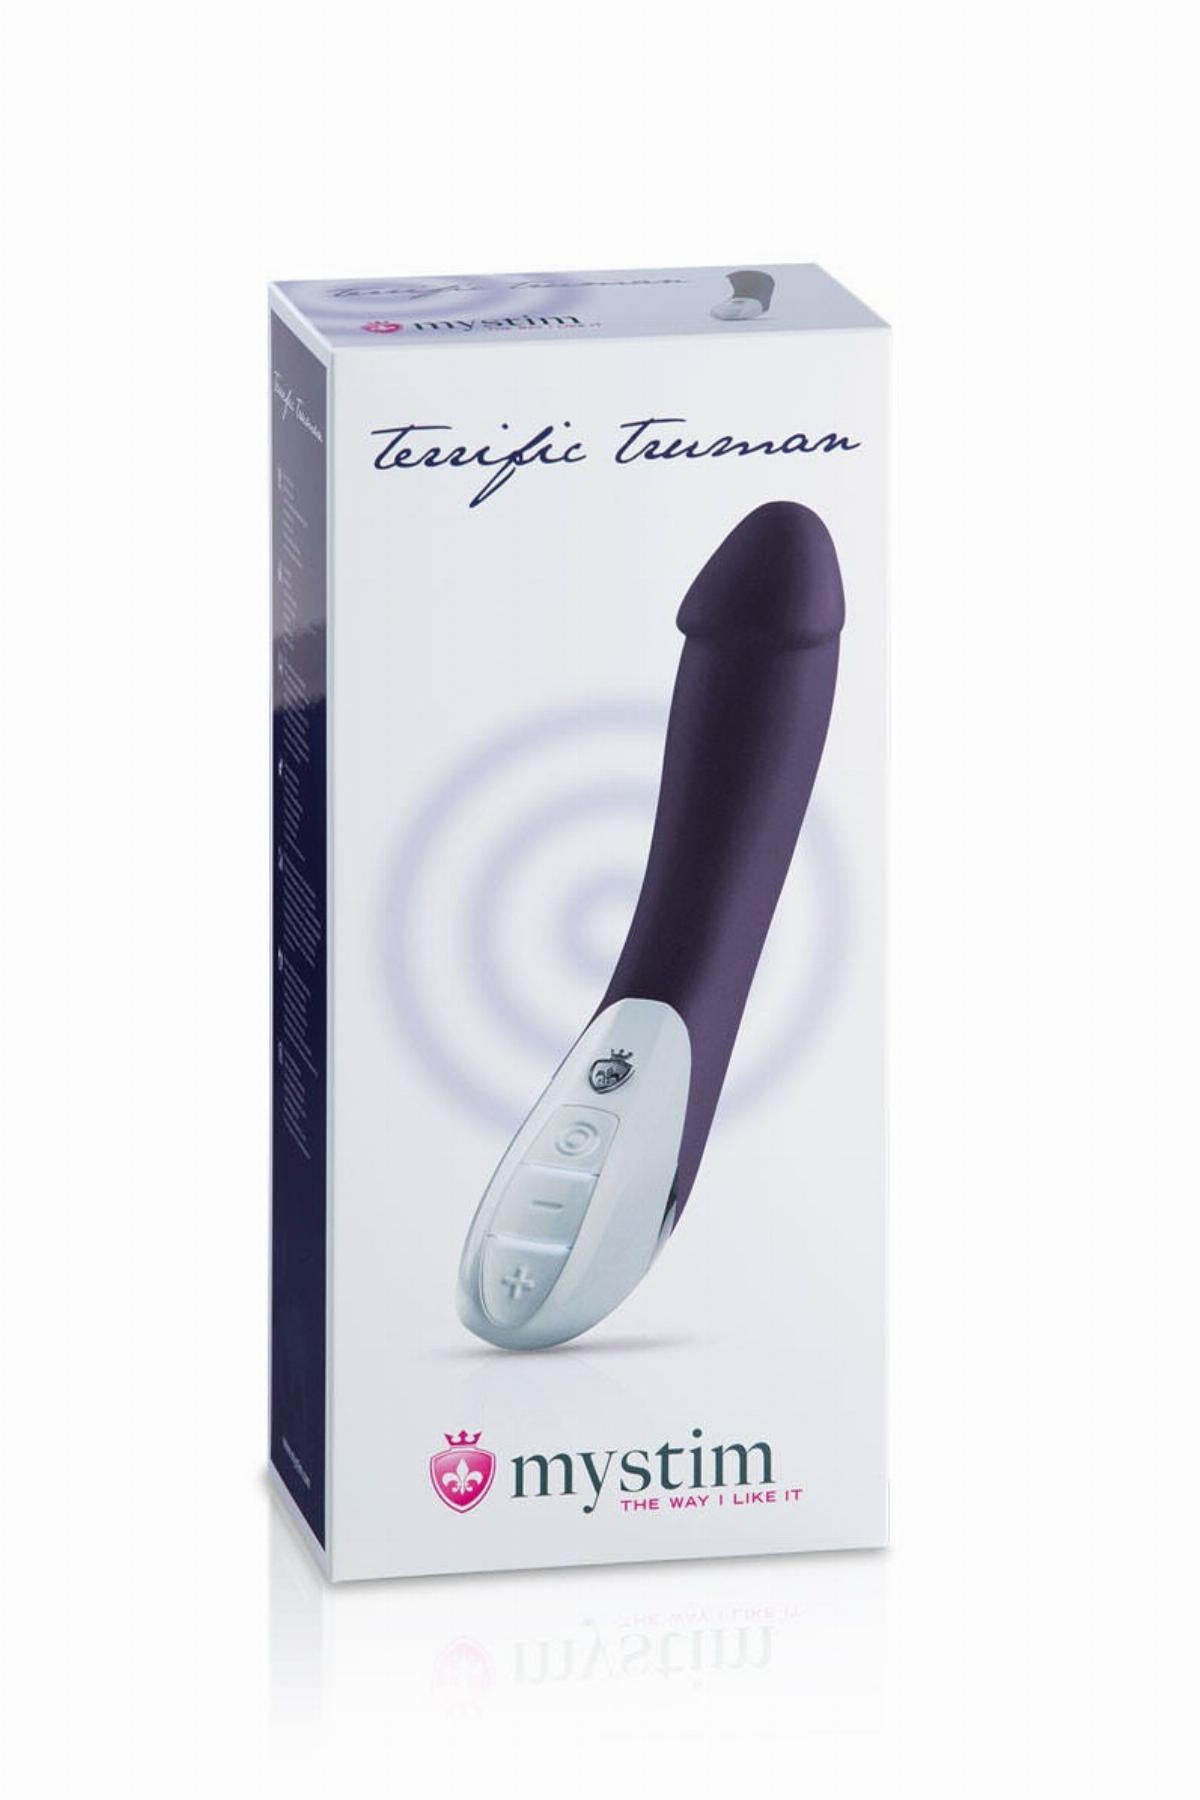 Mystim - Terrific Truman Vibrator